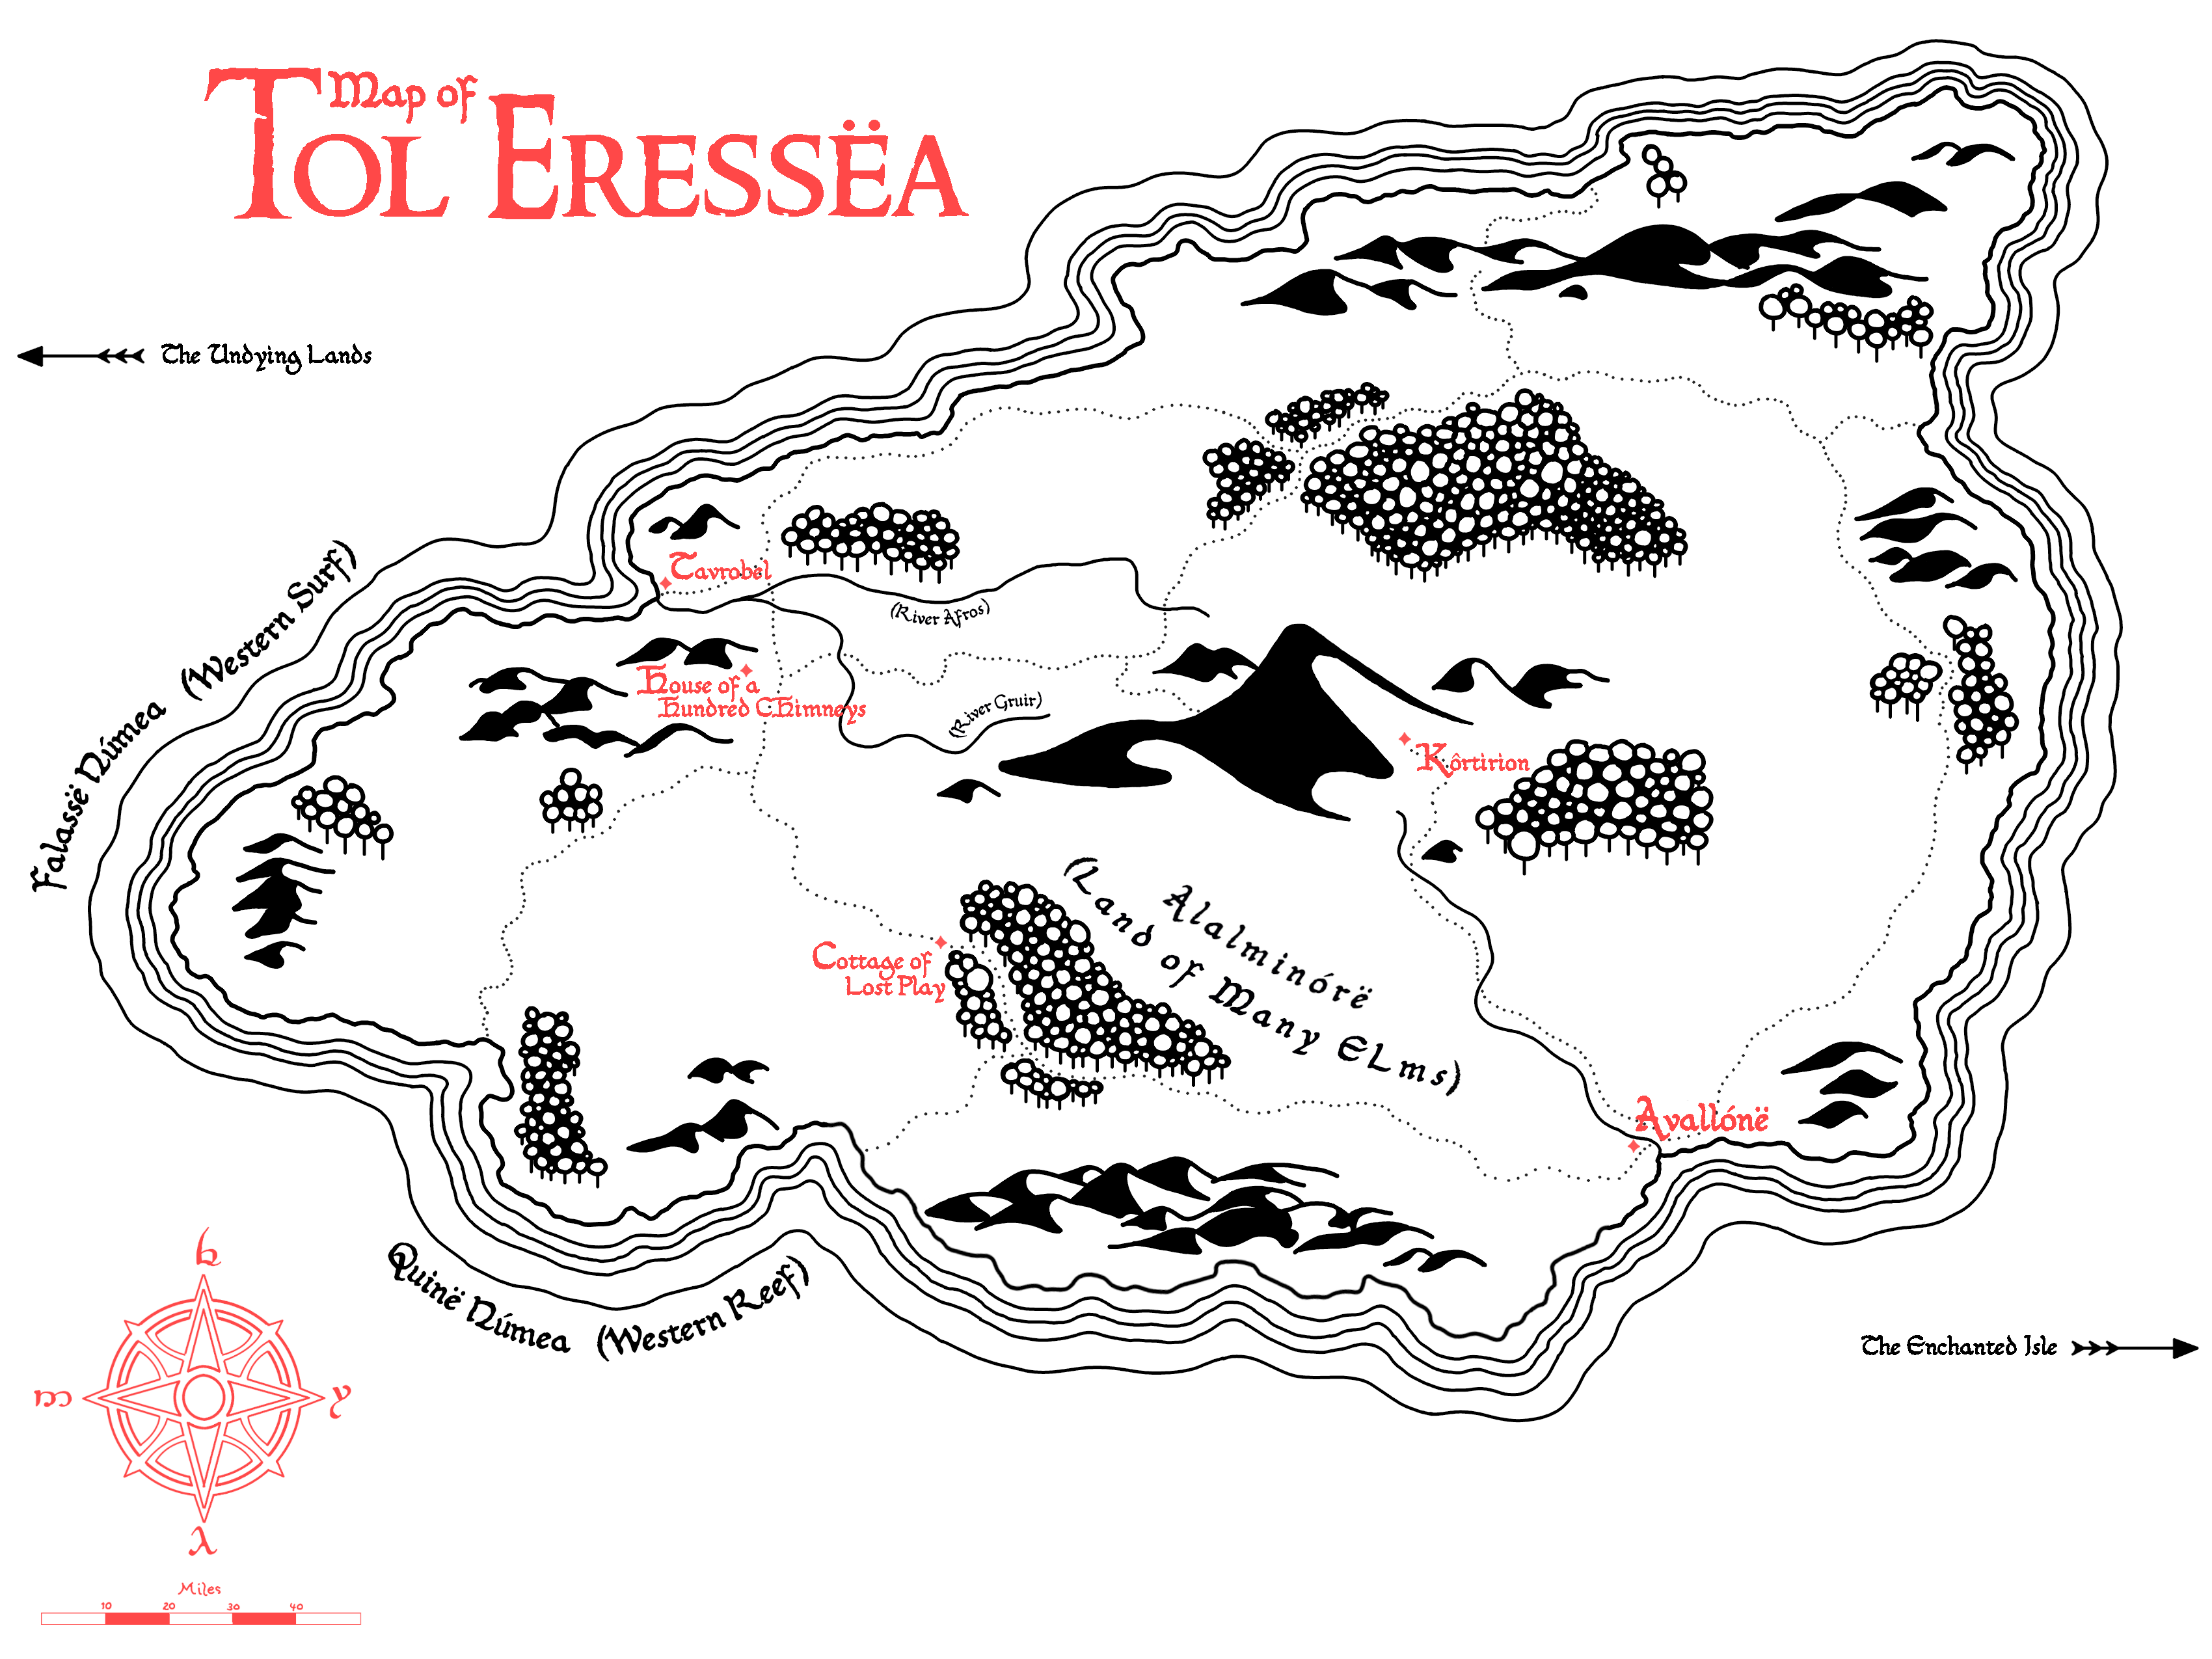 Map of Tol Eressëa by Nelman Black